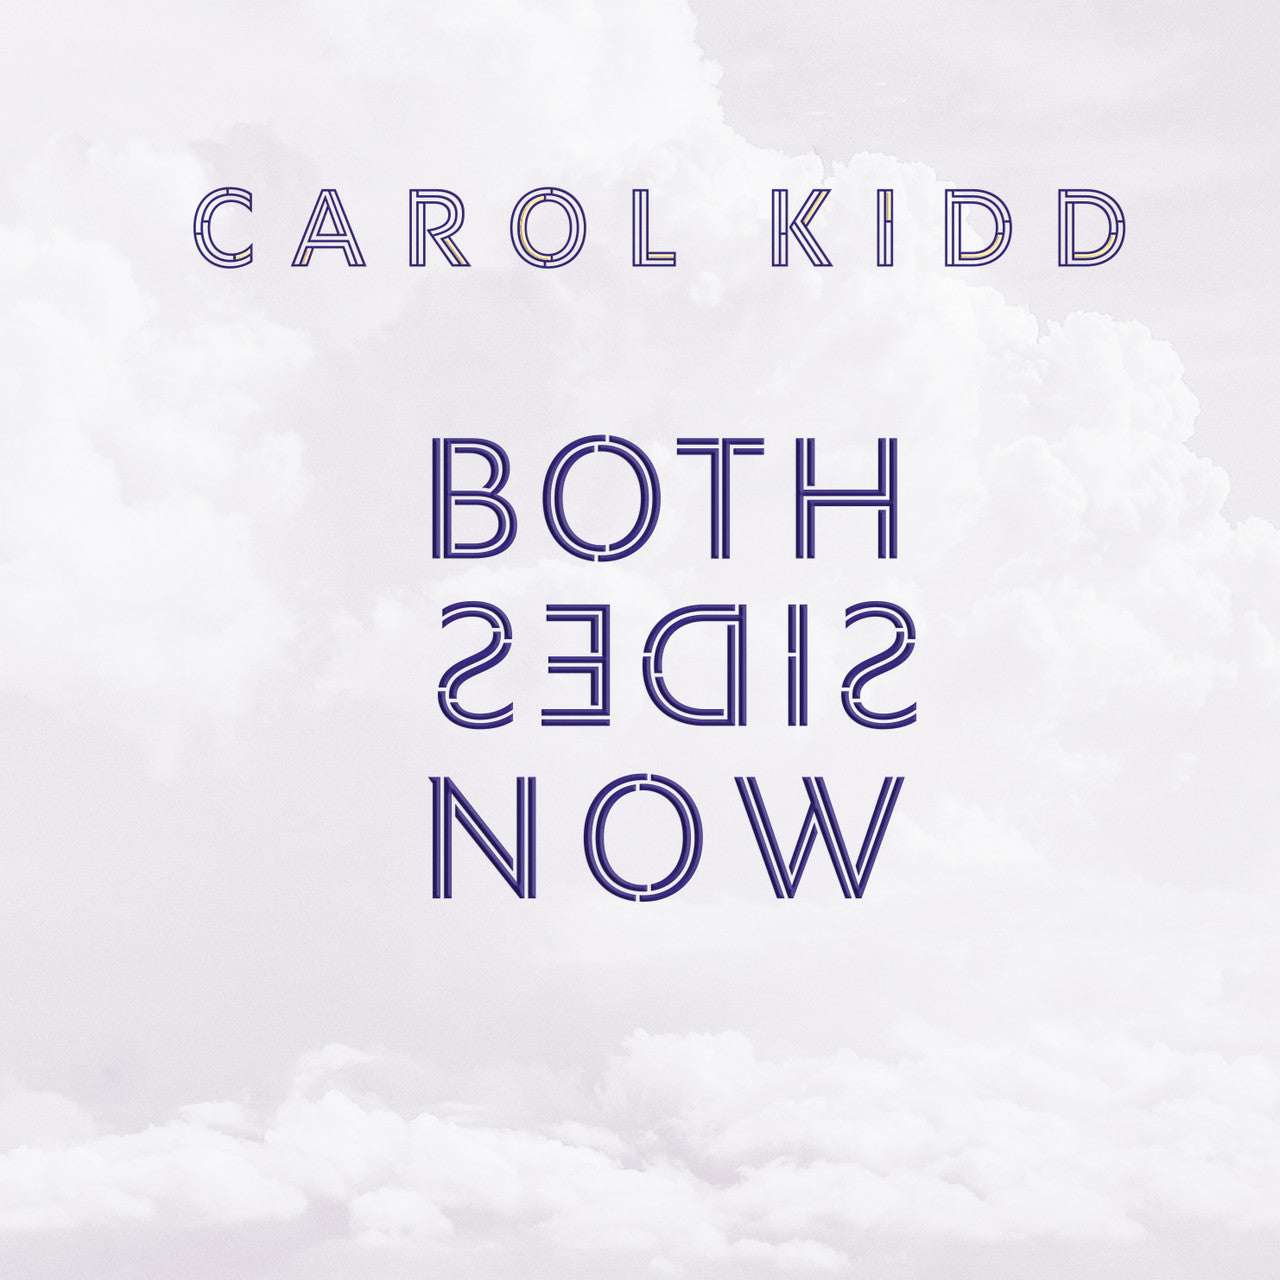 Carol Kidd - Both Sides Now - Impex LP